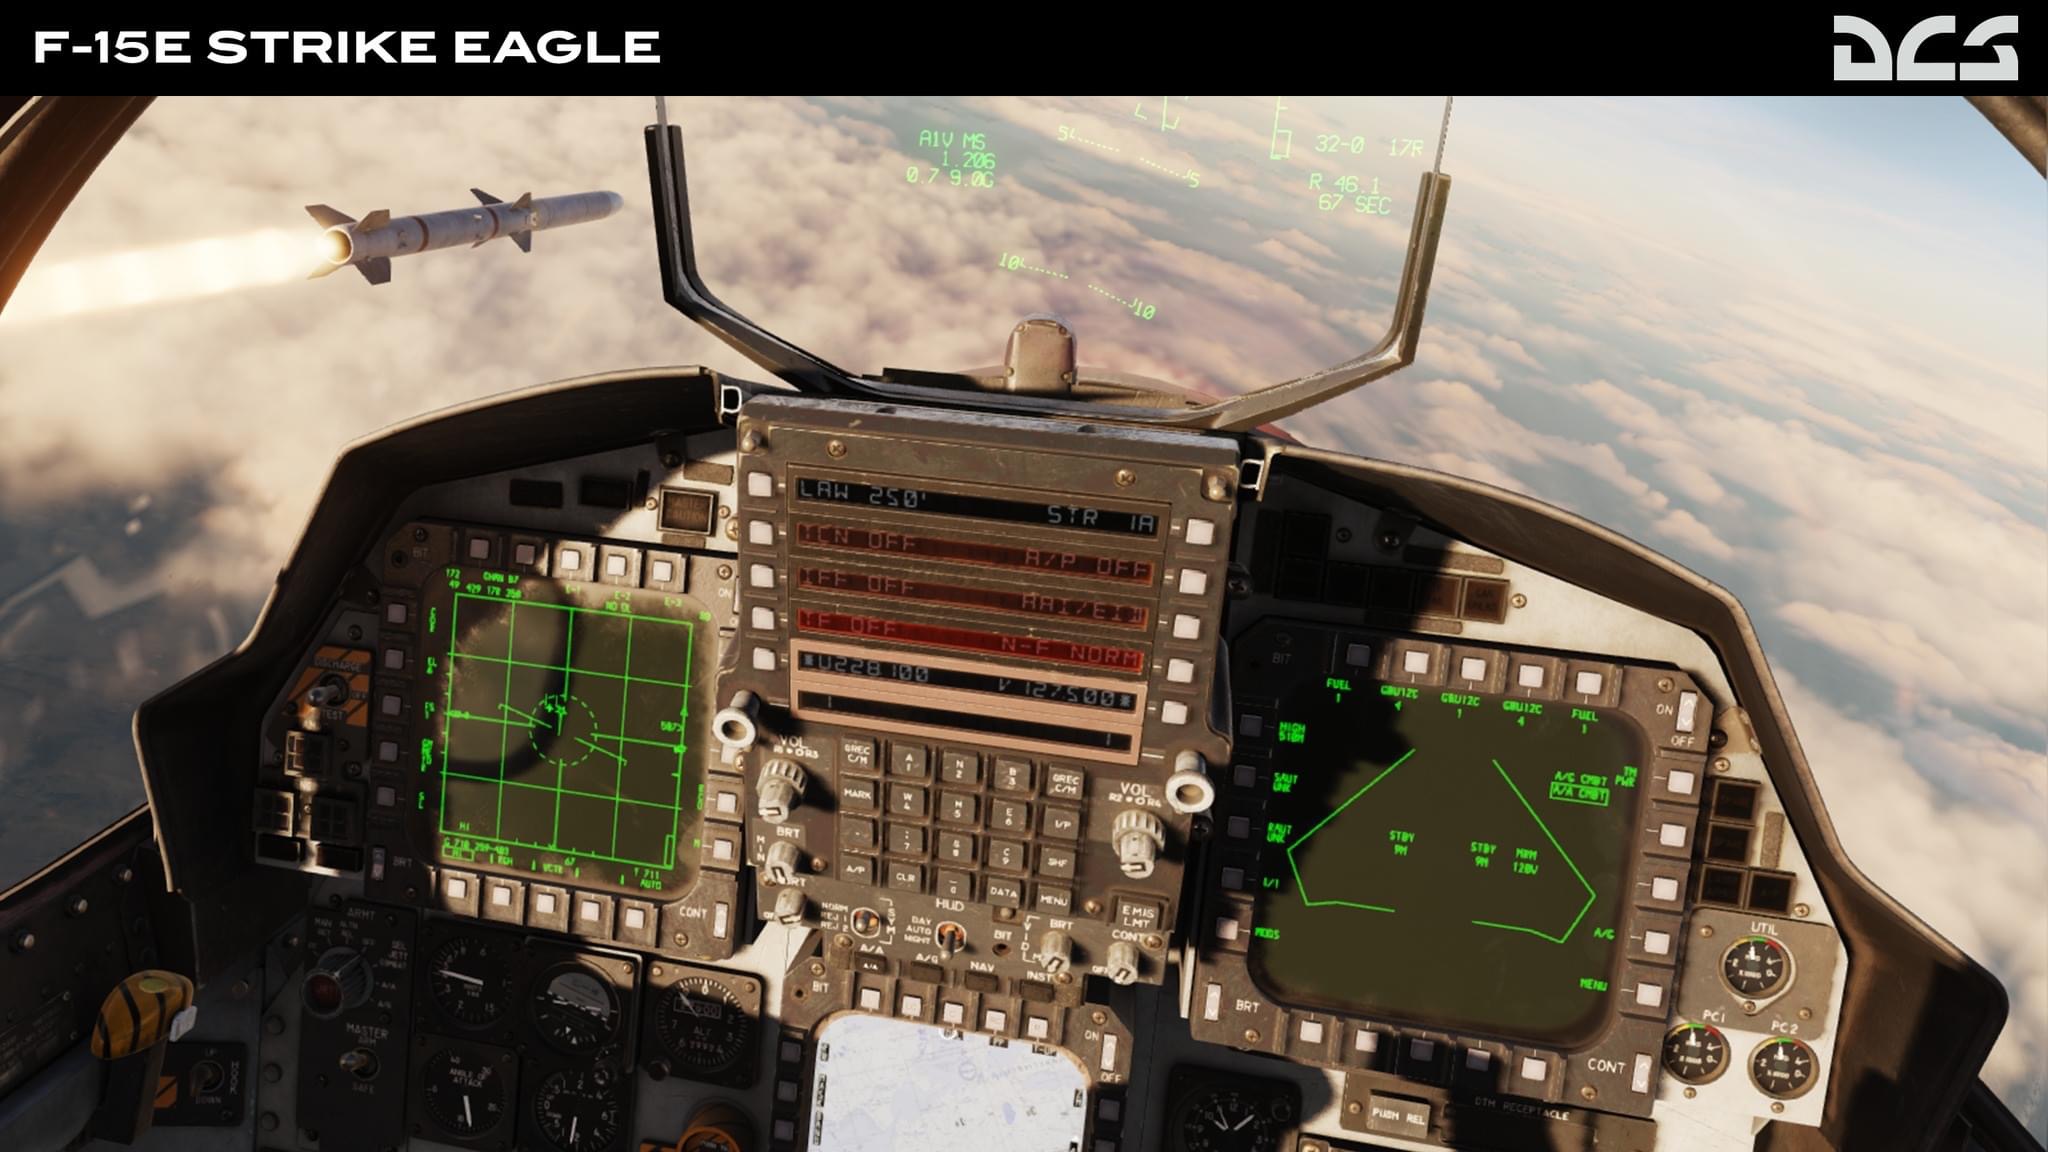 F-15E STRIKE EAGLE en approche - Page 2 6c397910